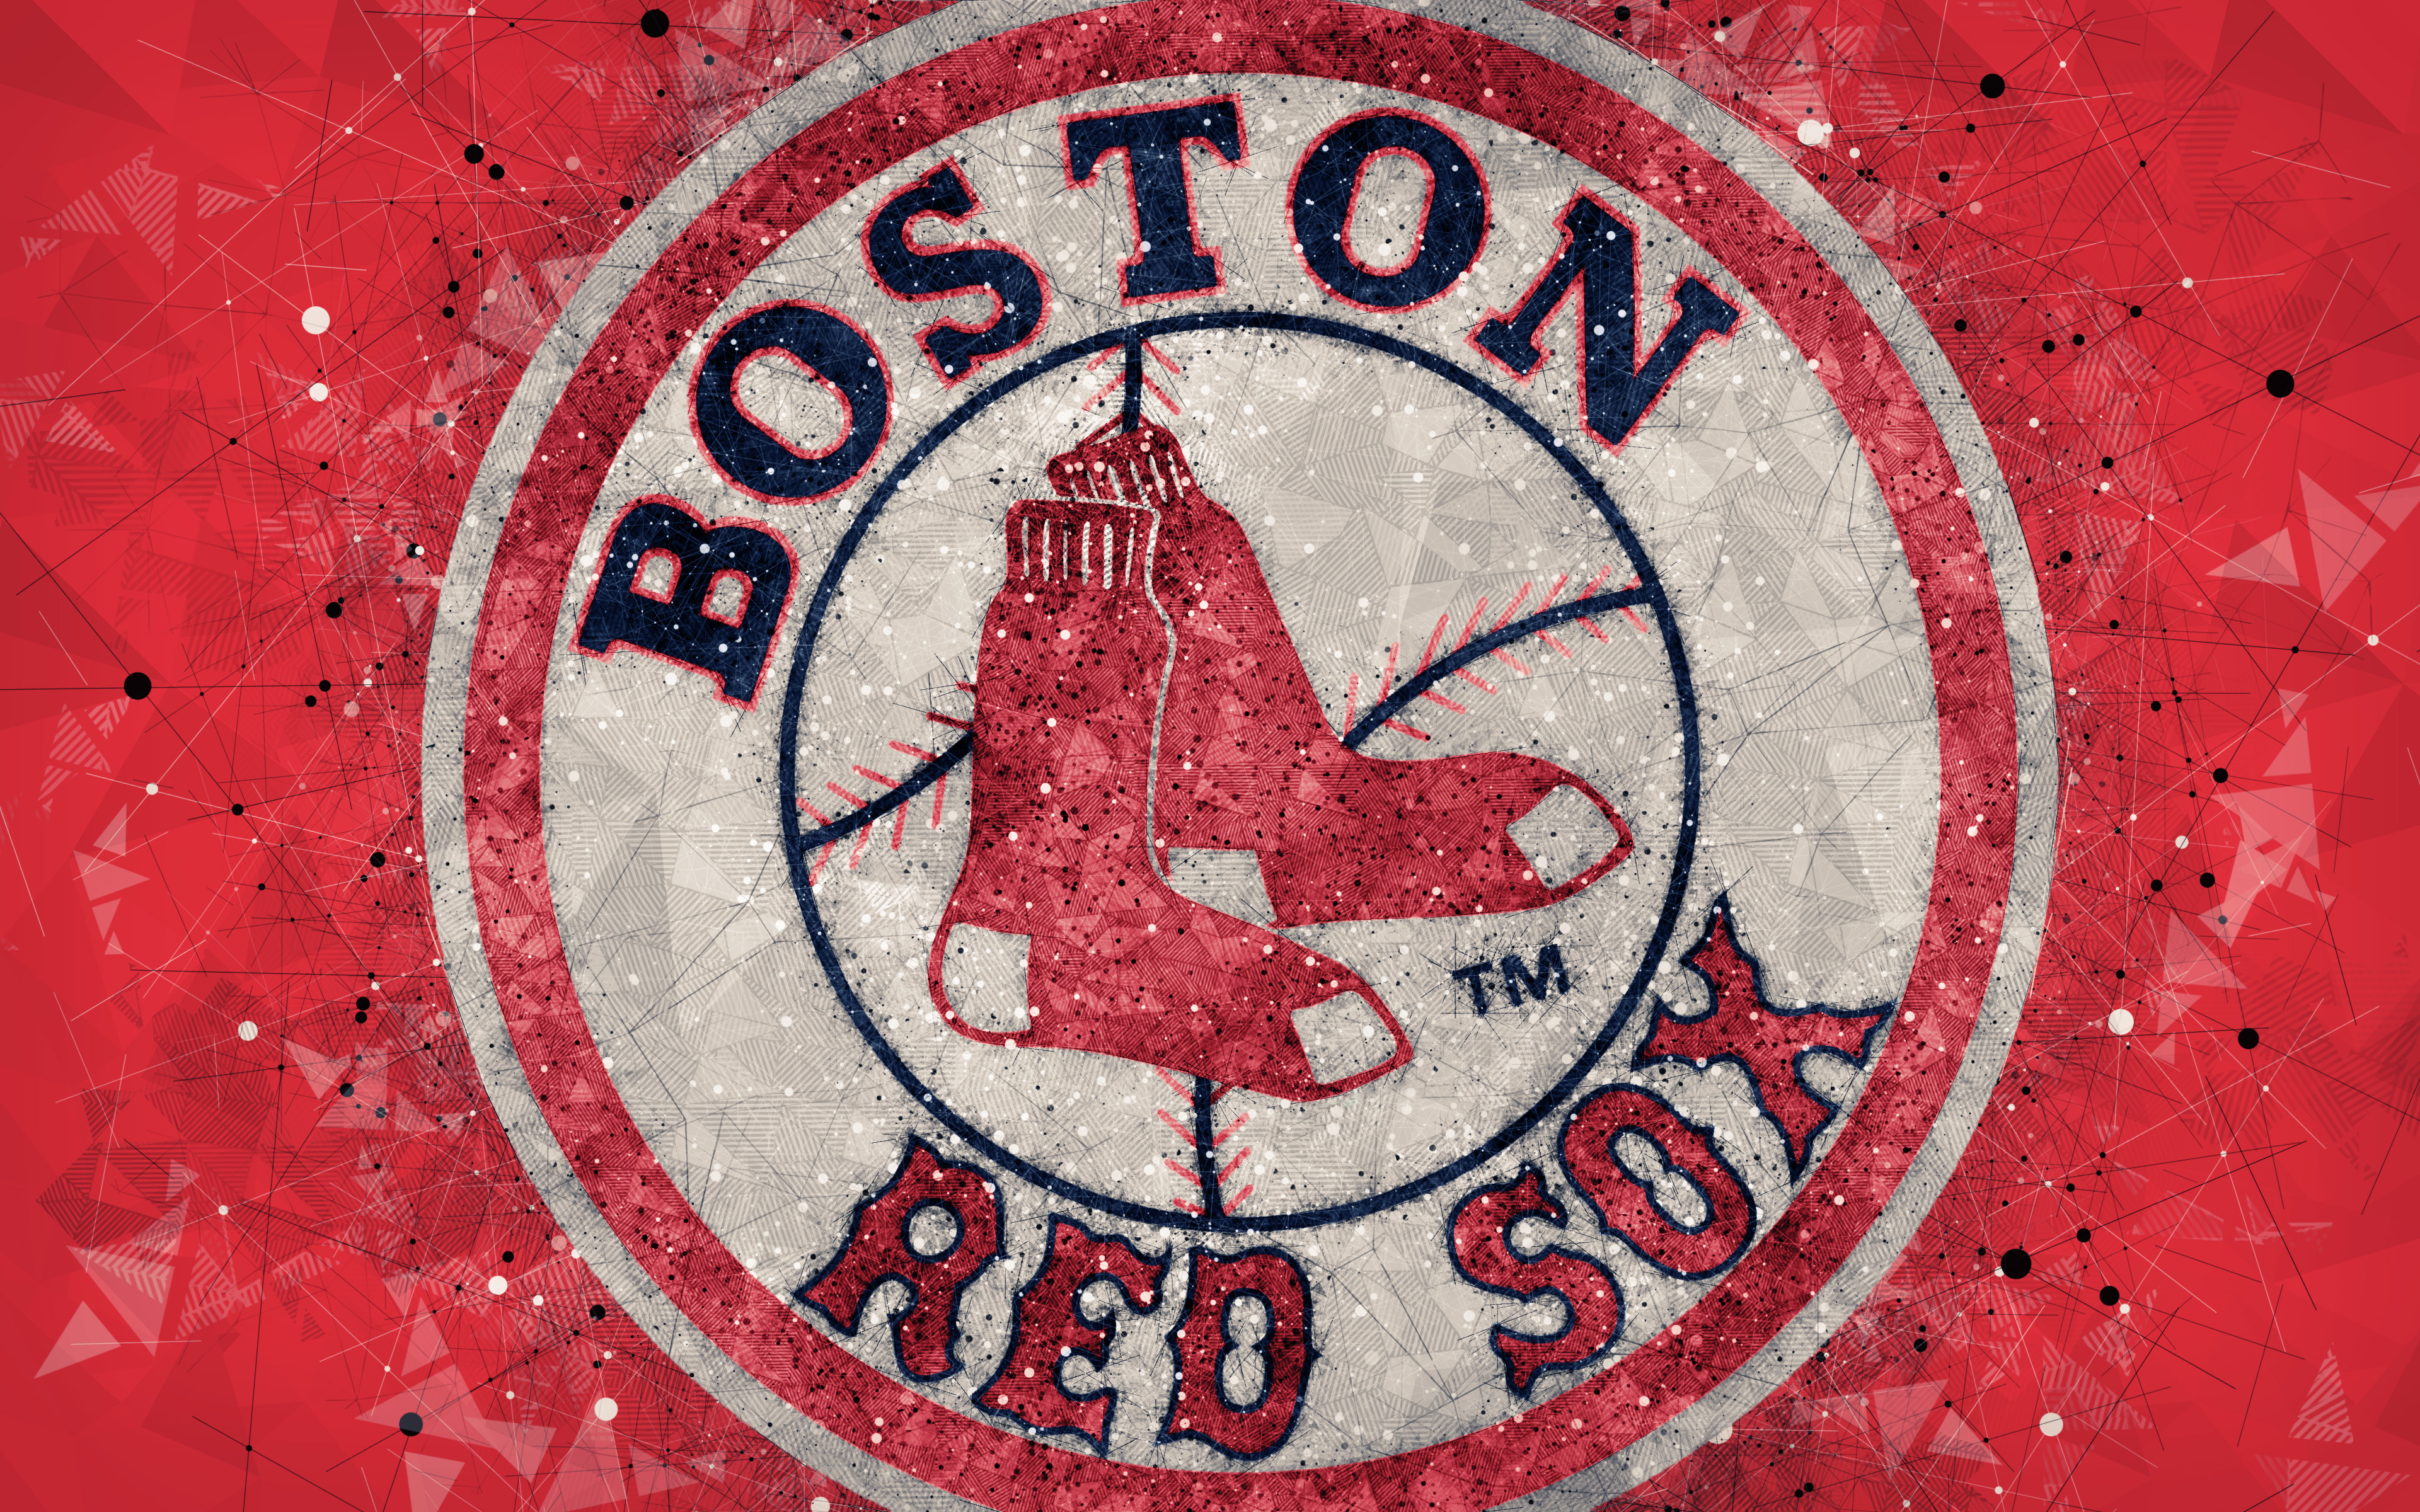 Boston Red Sox 4k Ultra HD Wallpapers.